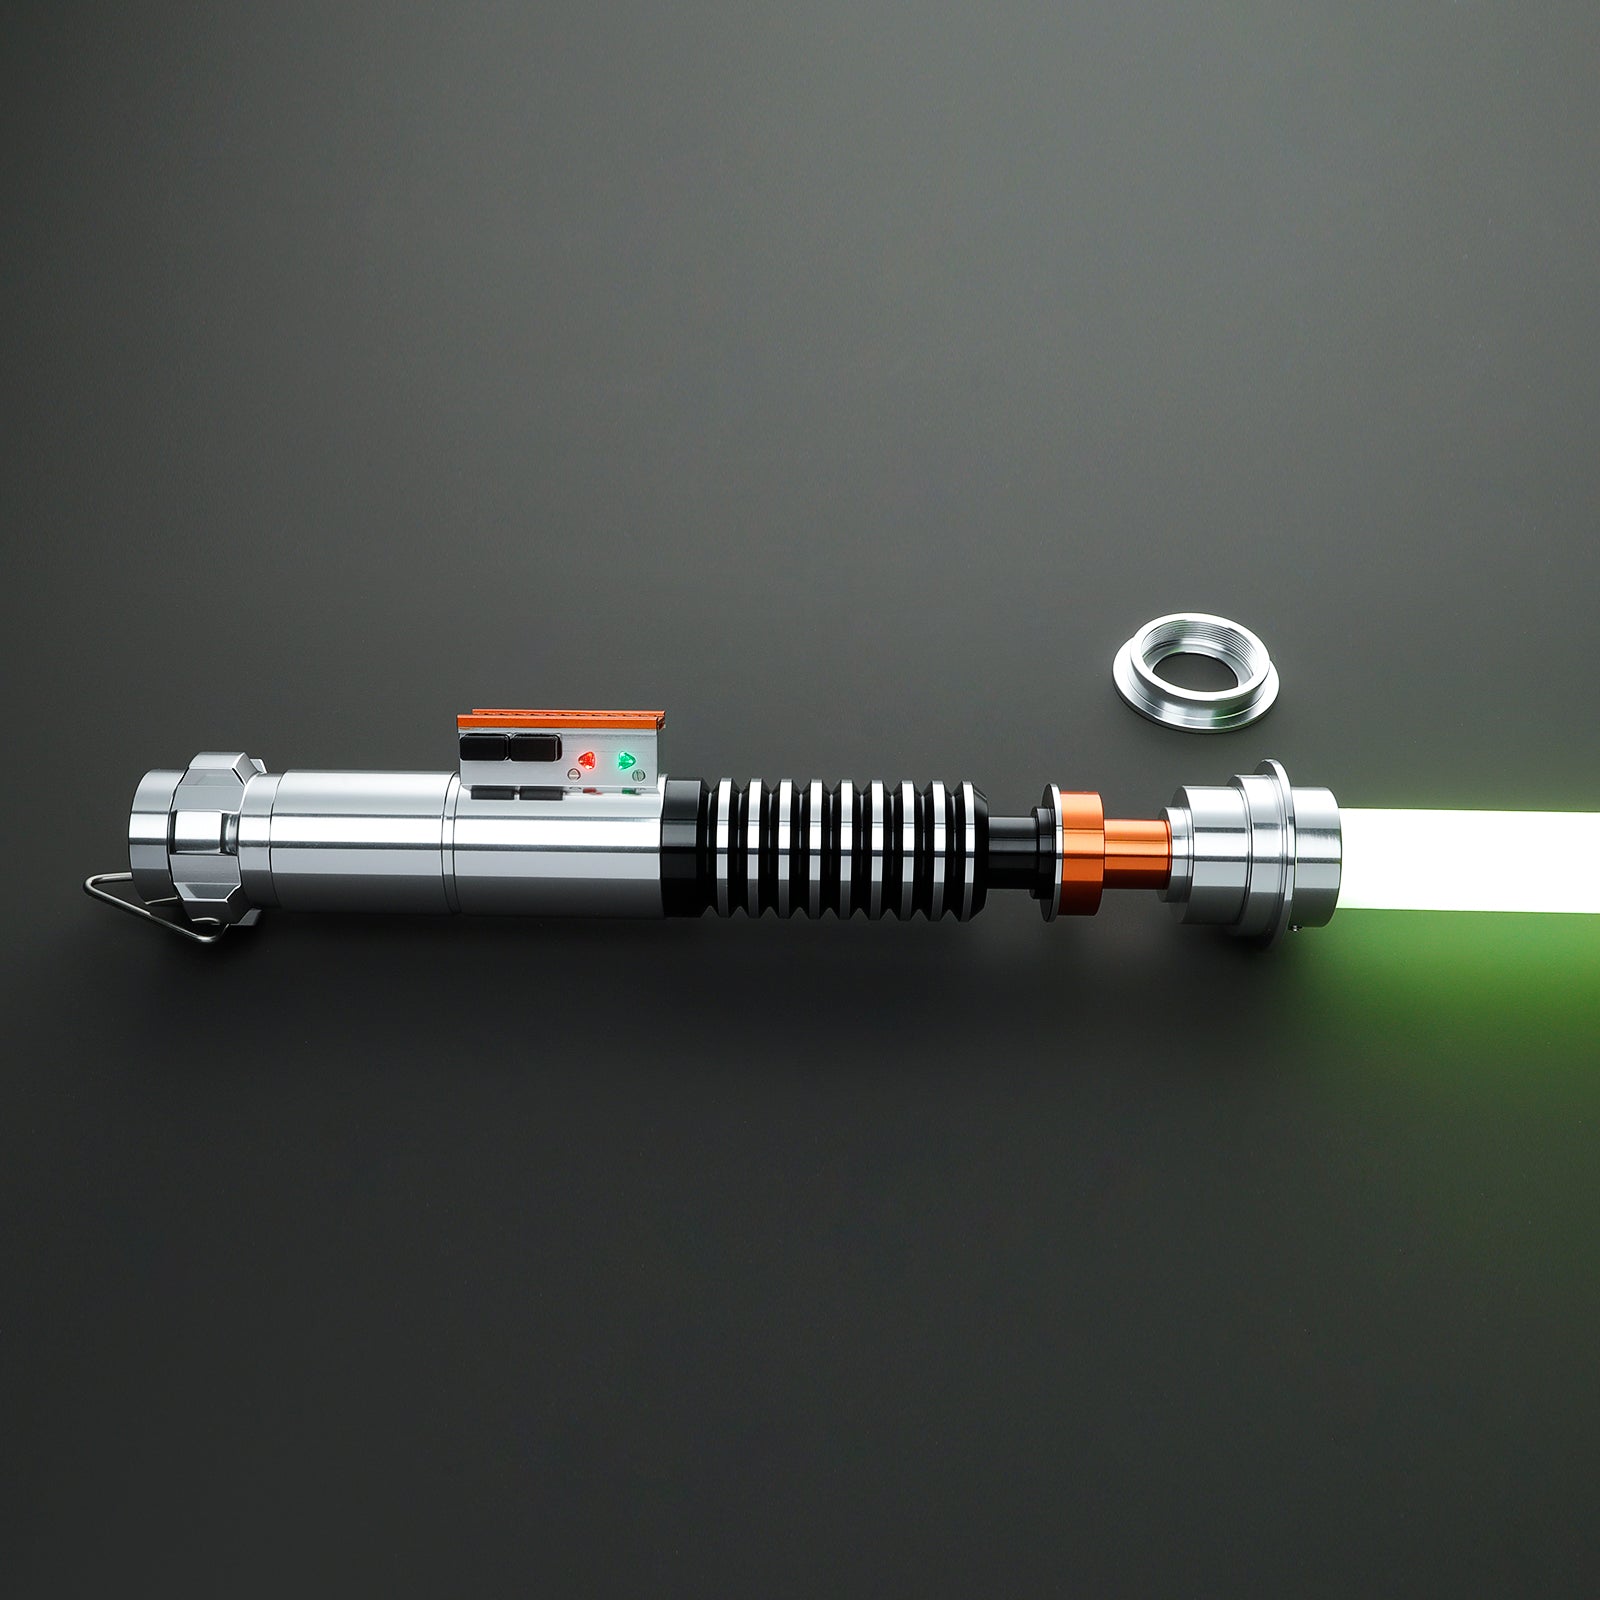 SaberCustom Luke Skywalker Lightsaber Xenopixel v3 Light Saber Infinite Colors Changing NO059-1